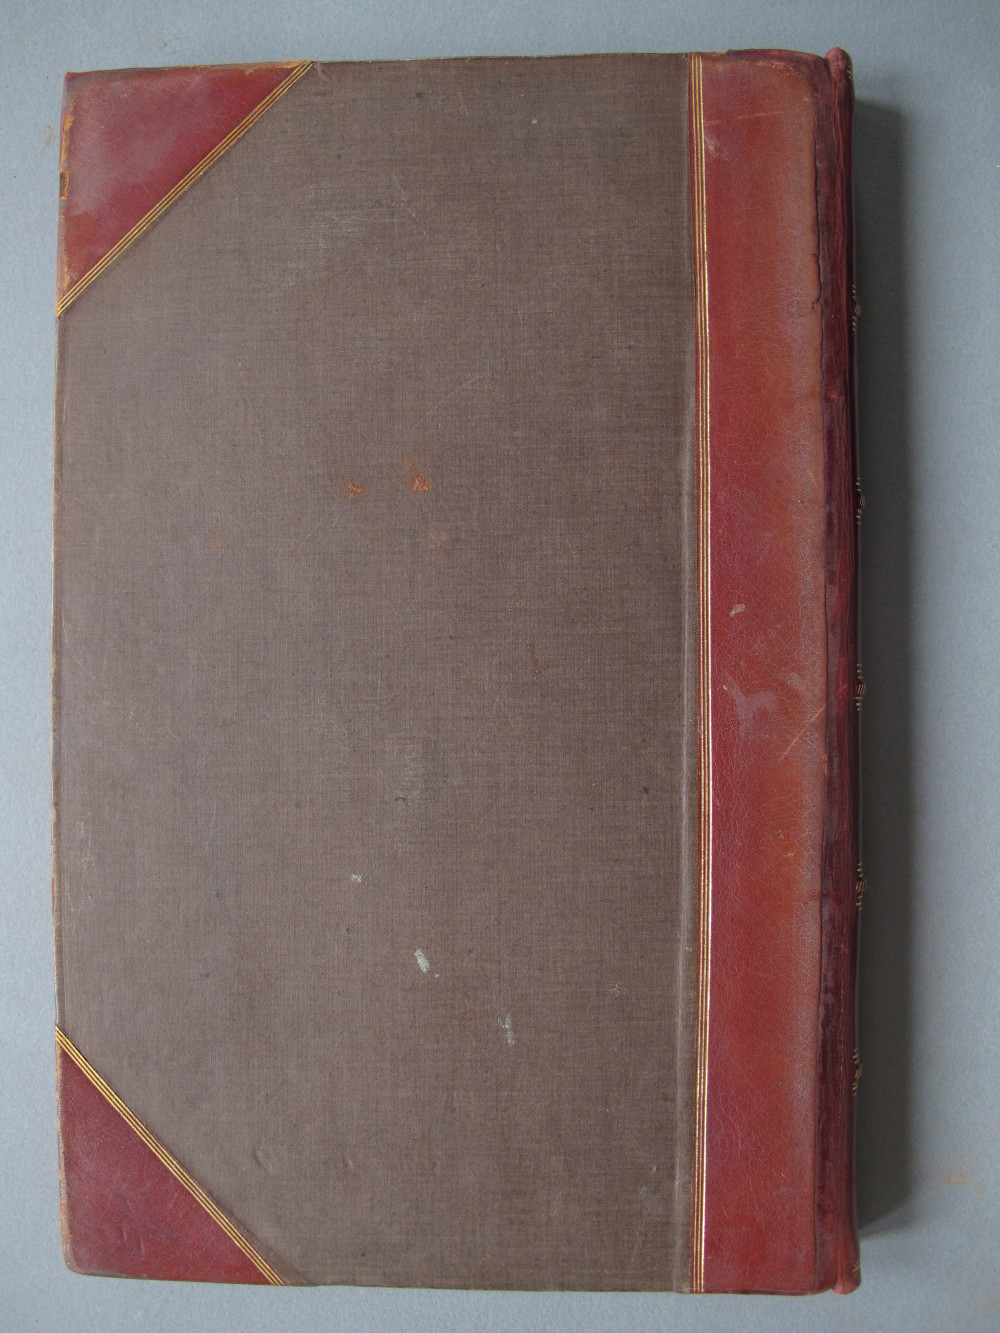 Folio 95 versoBinding